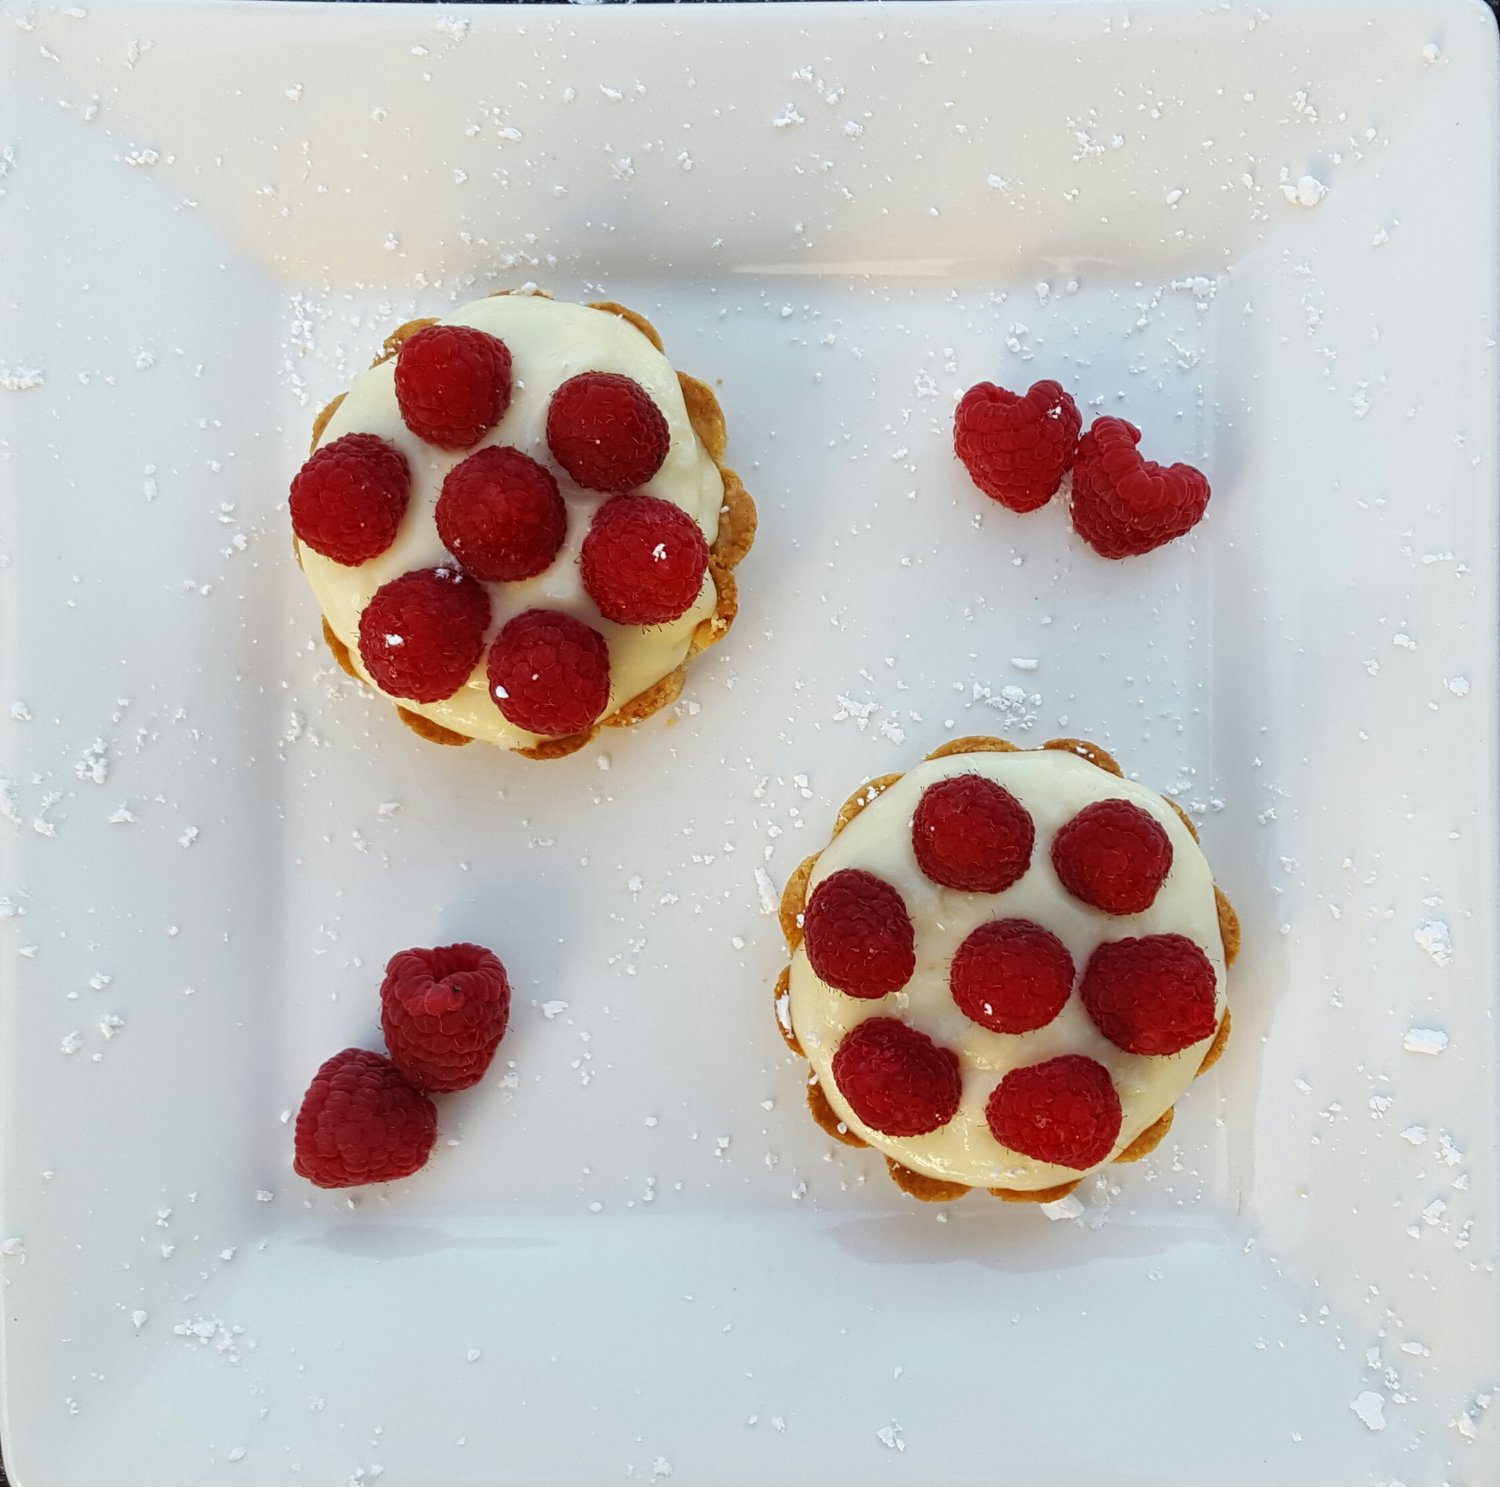 That's A Keeper 6 - Raspberry Cheesecake Tartlets.jpg